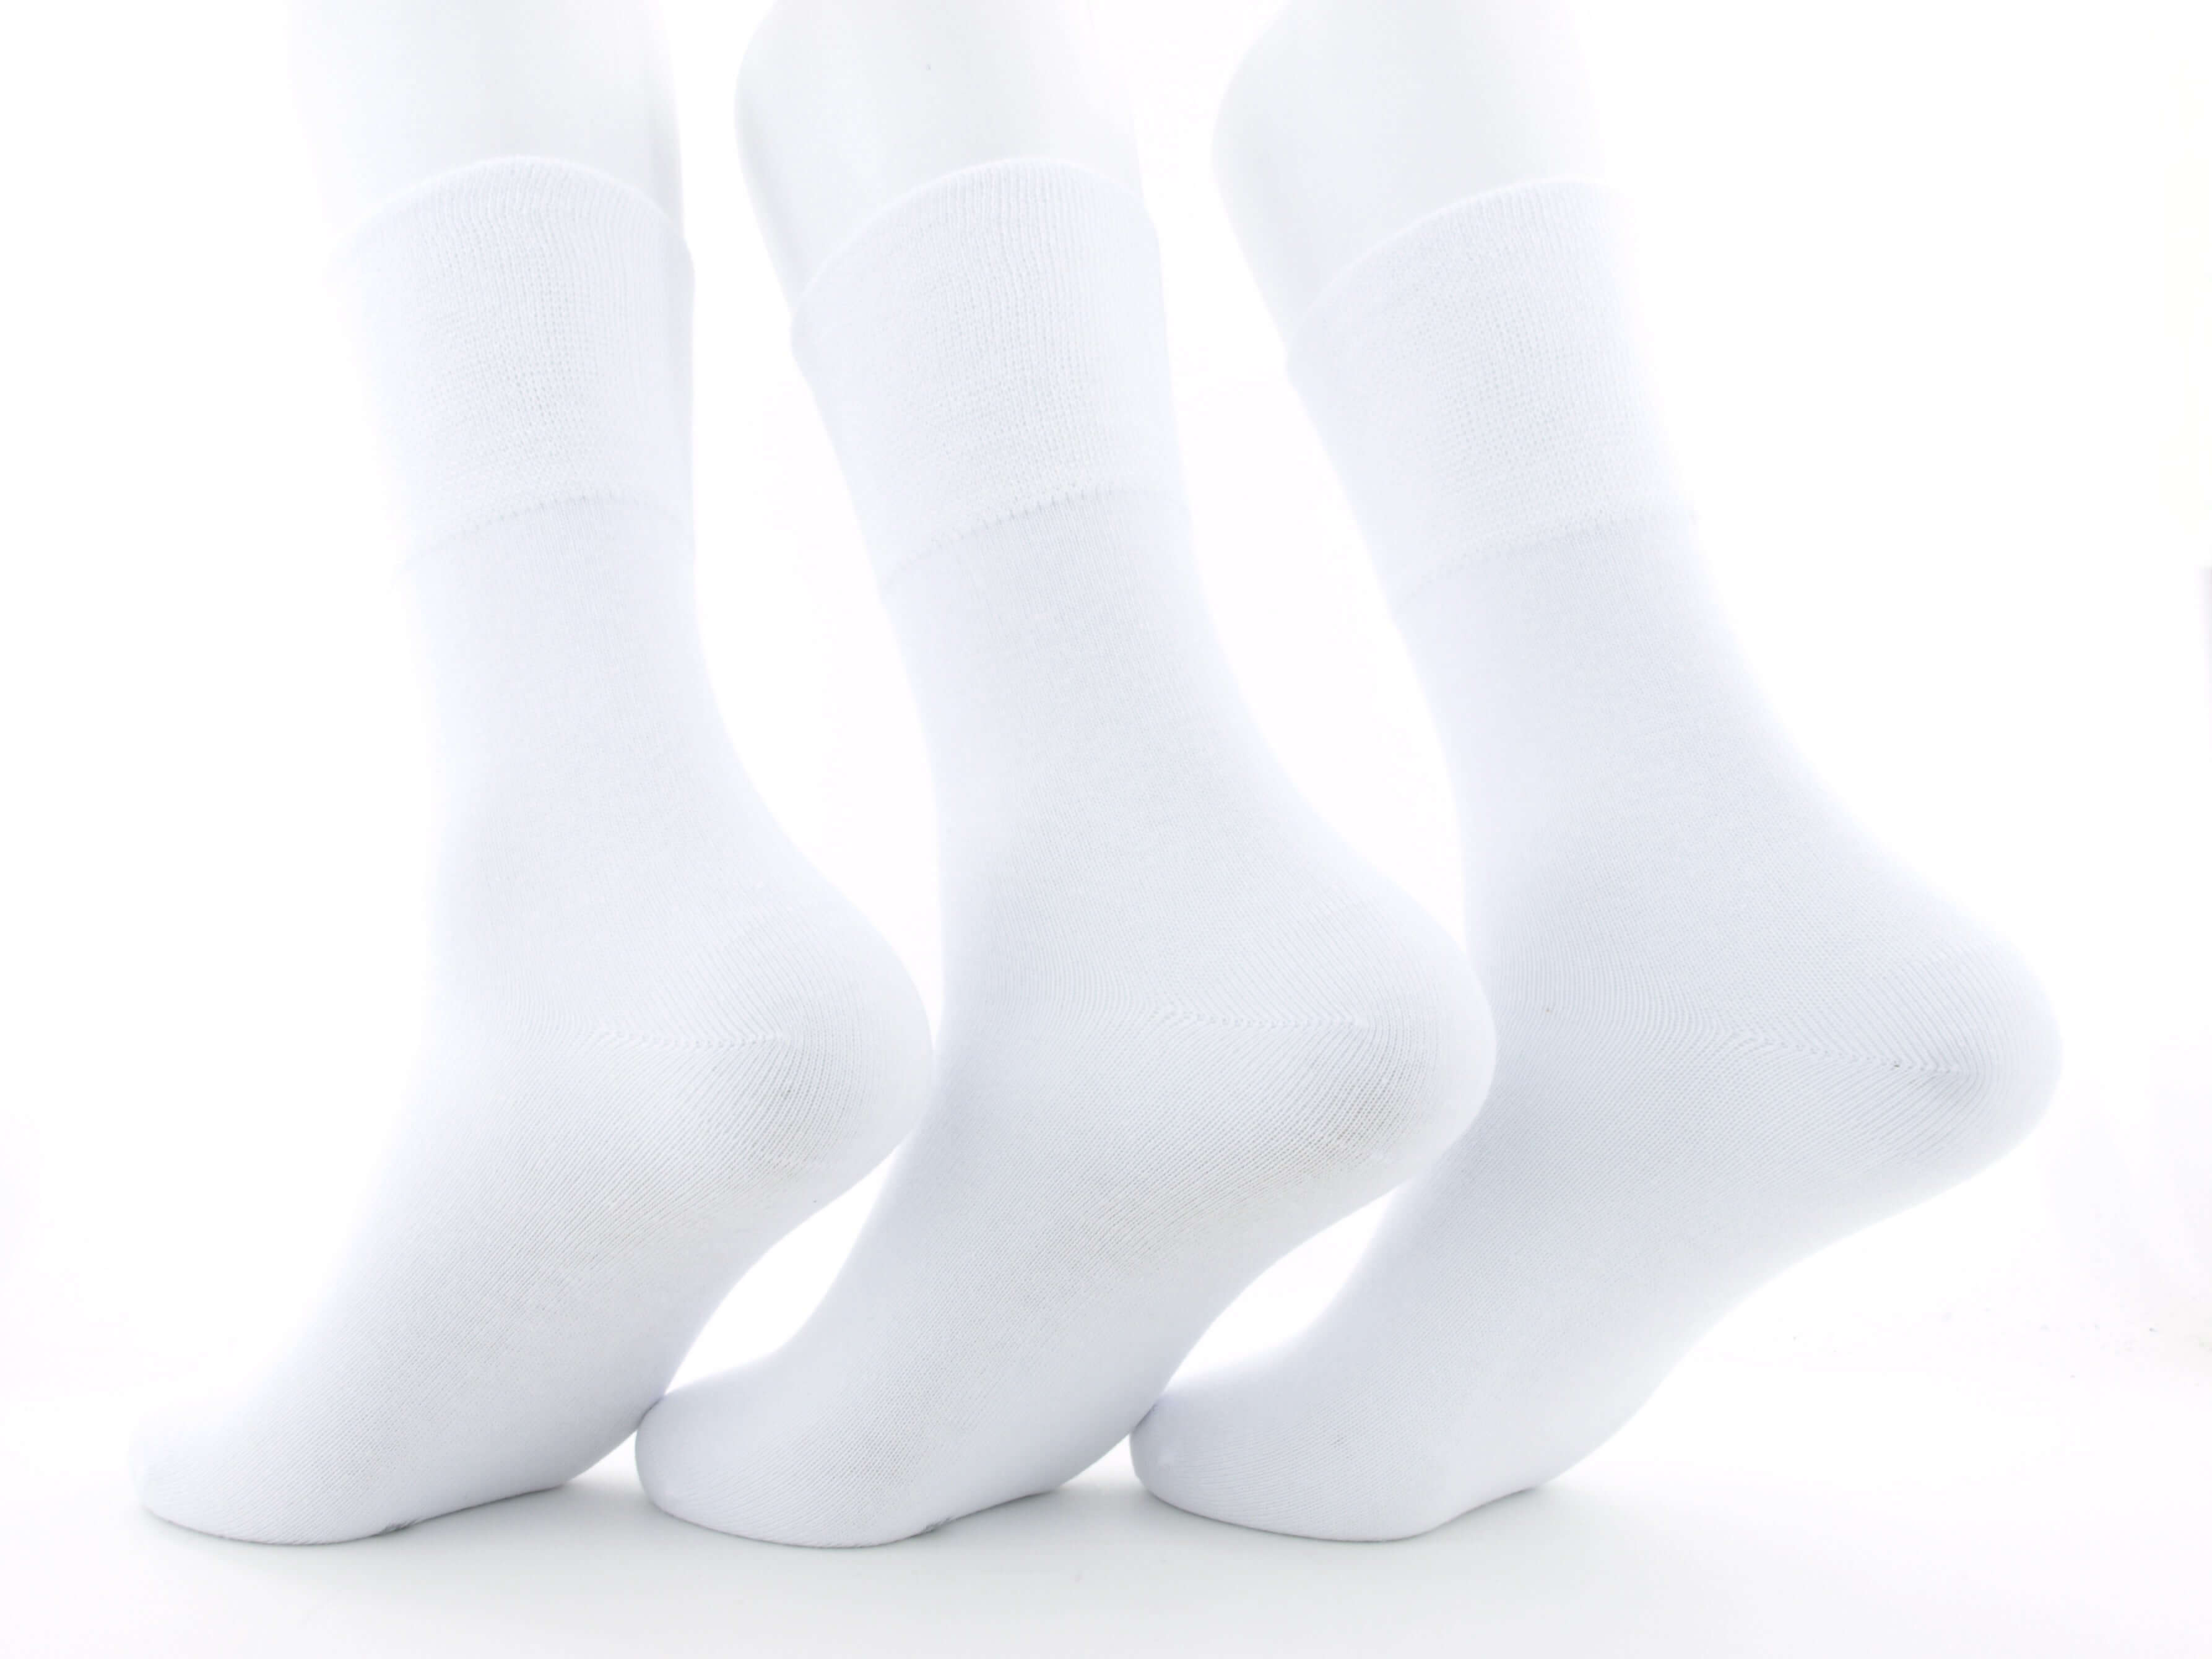 Bild: Diabetiker Socken Damen 97 % Baumwolle weiß 2